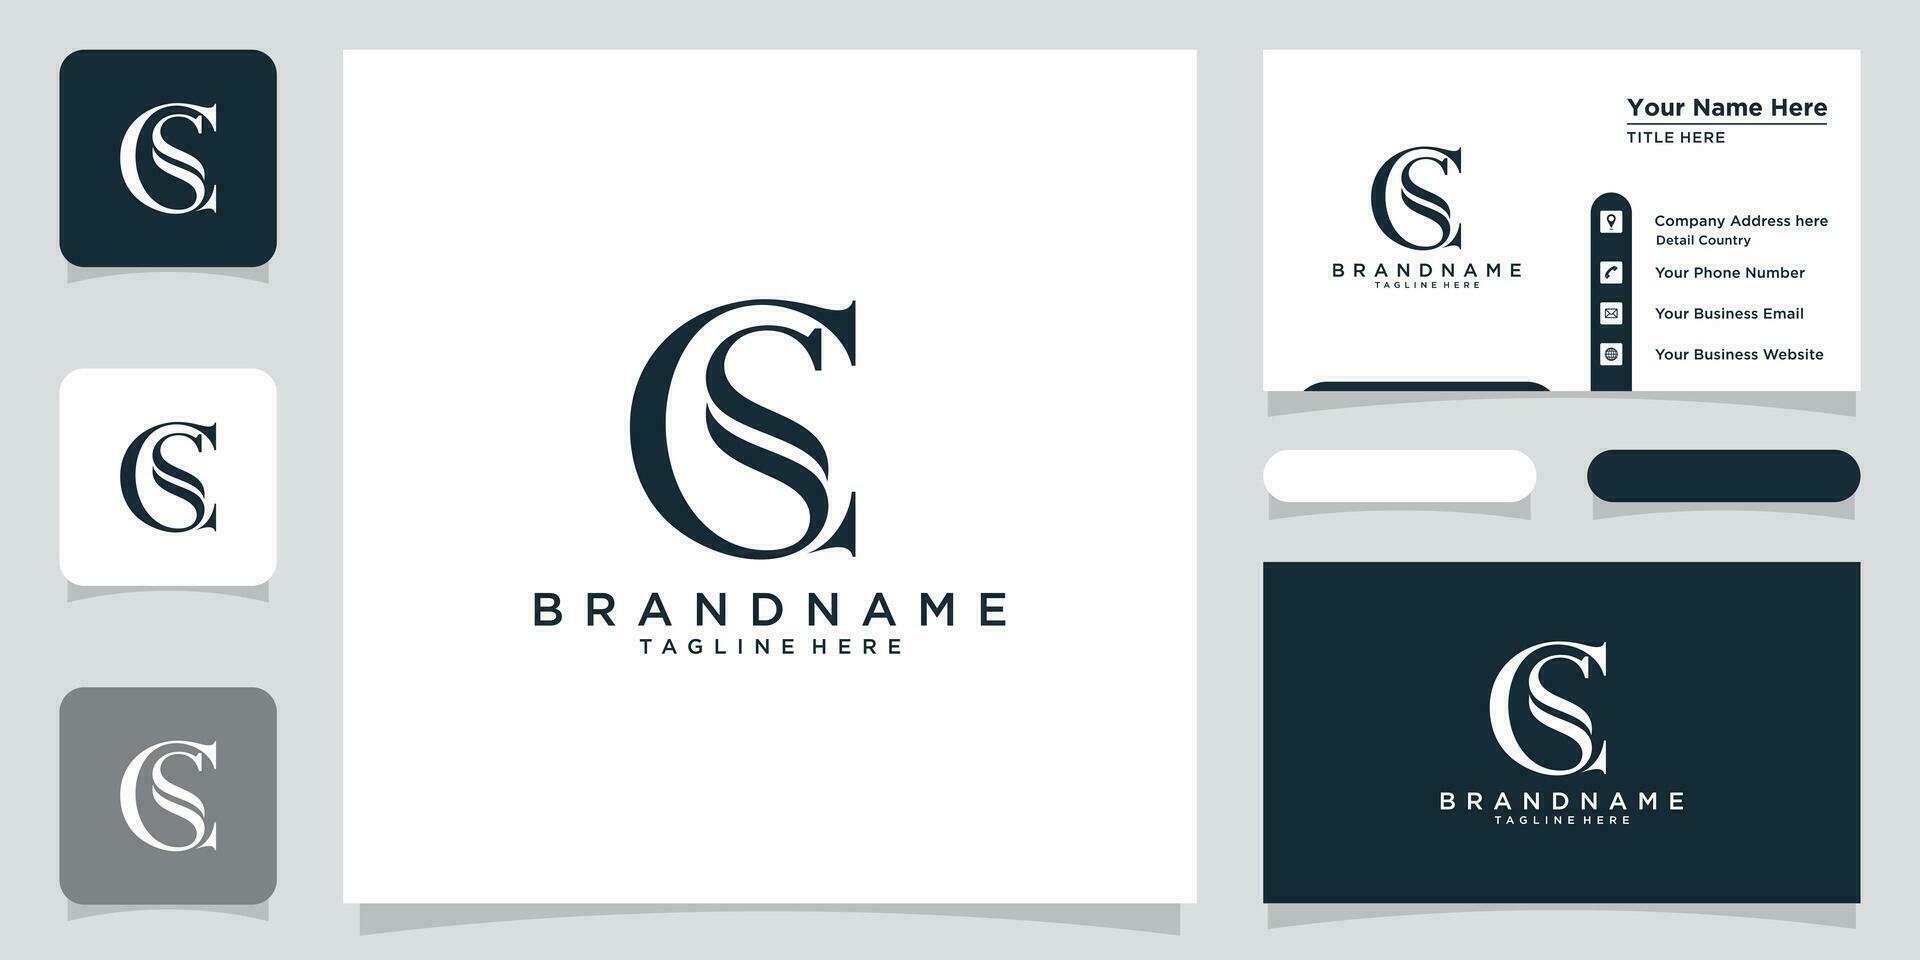 Alphabet CS or SC illustration monogram vector logo template with business card design Premium Vector